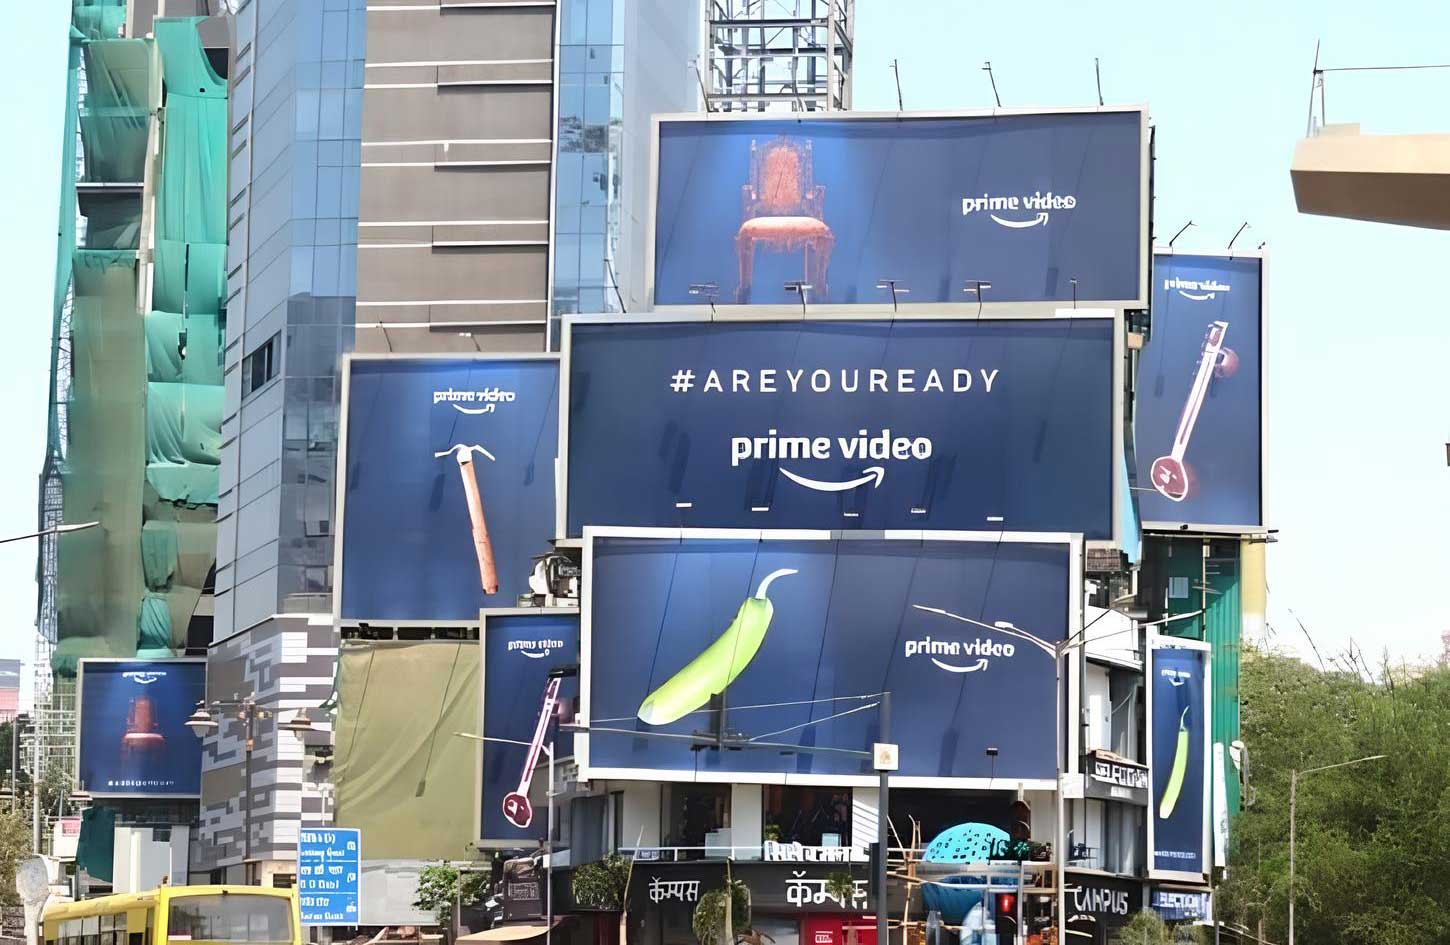 Amazon Prime’s #AreYouReady teaser campaign